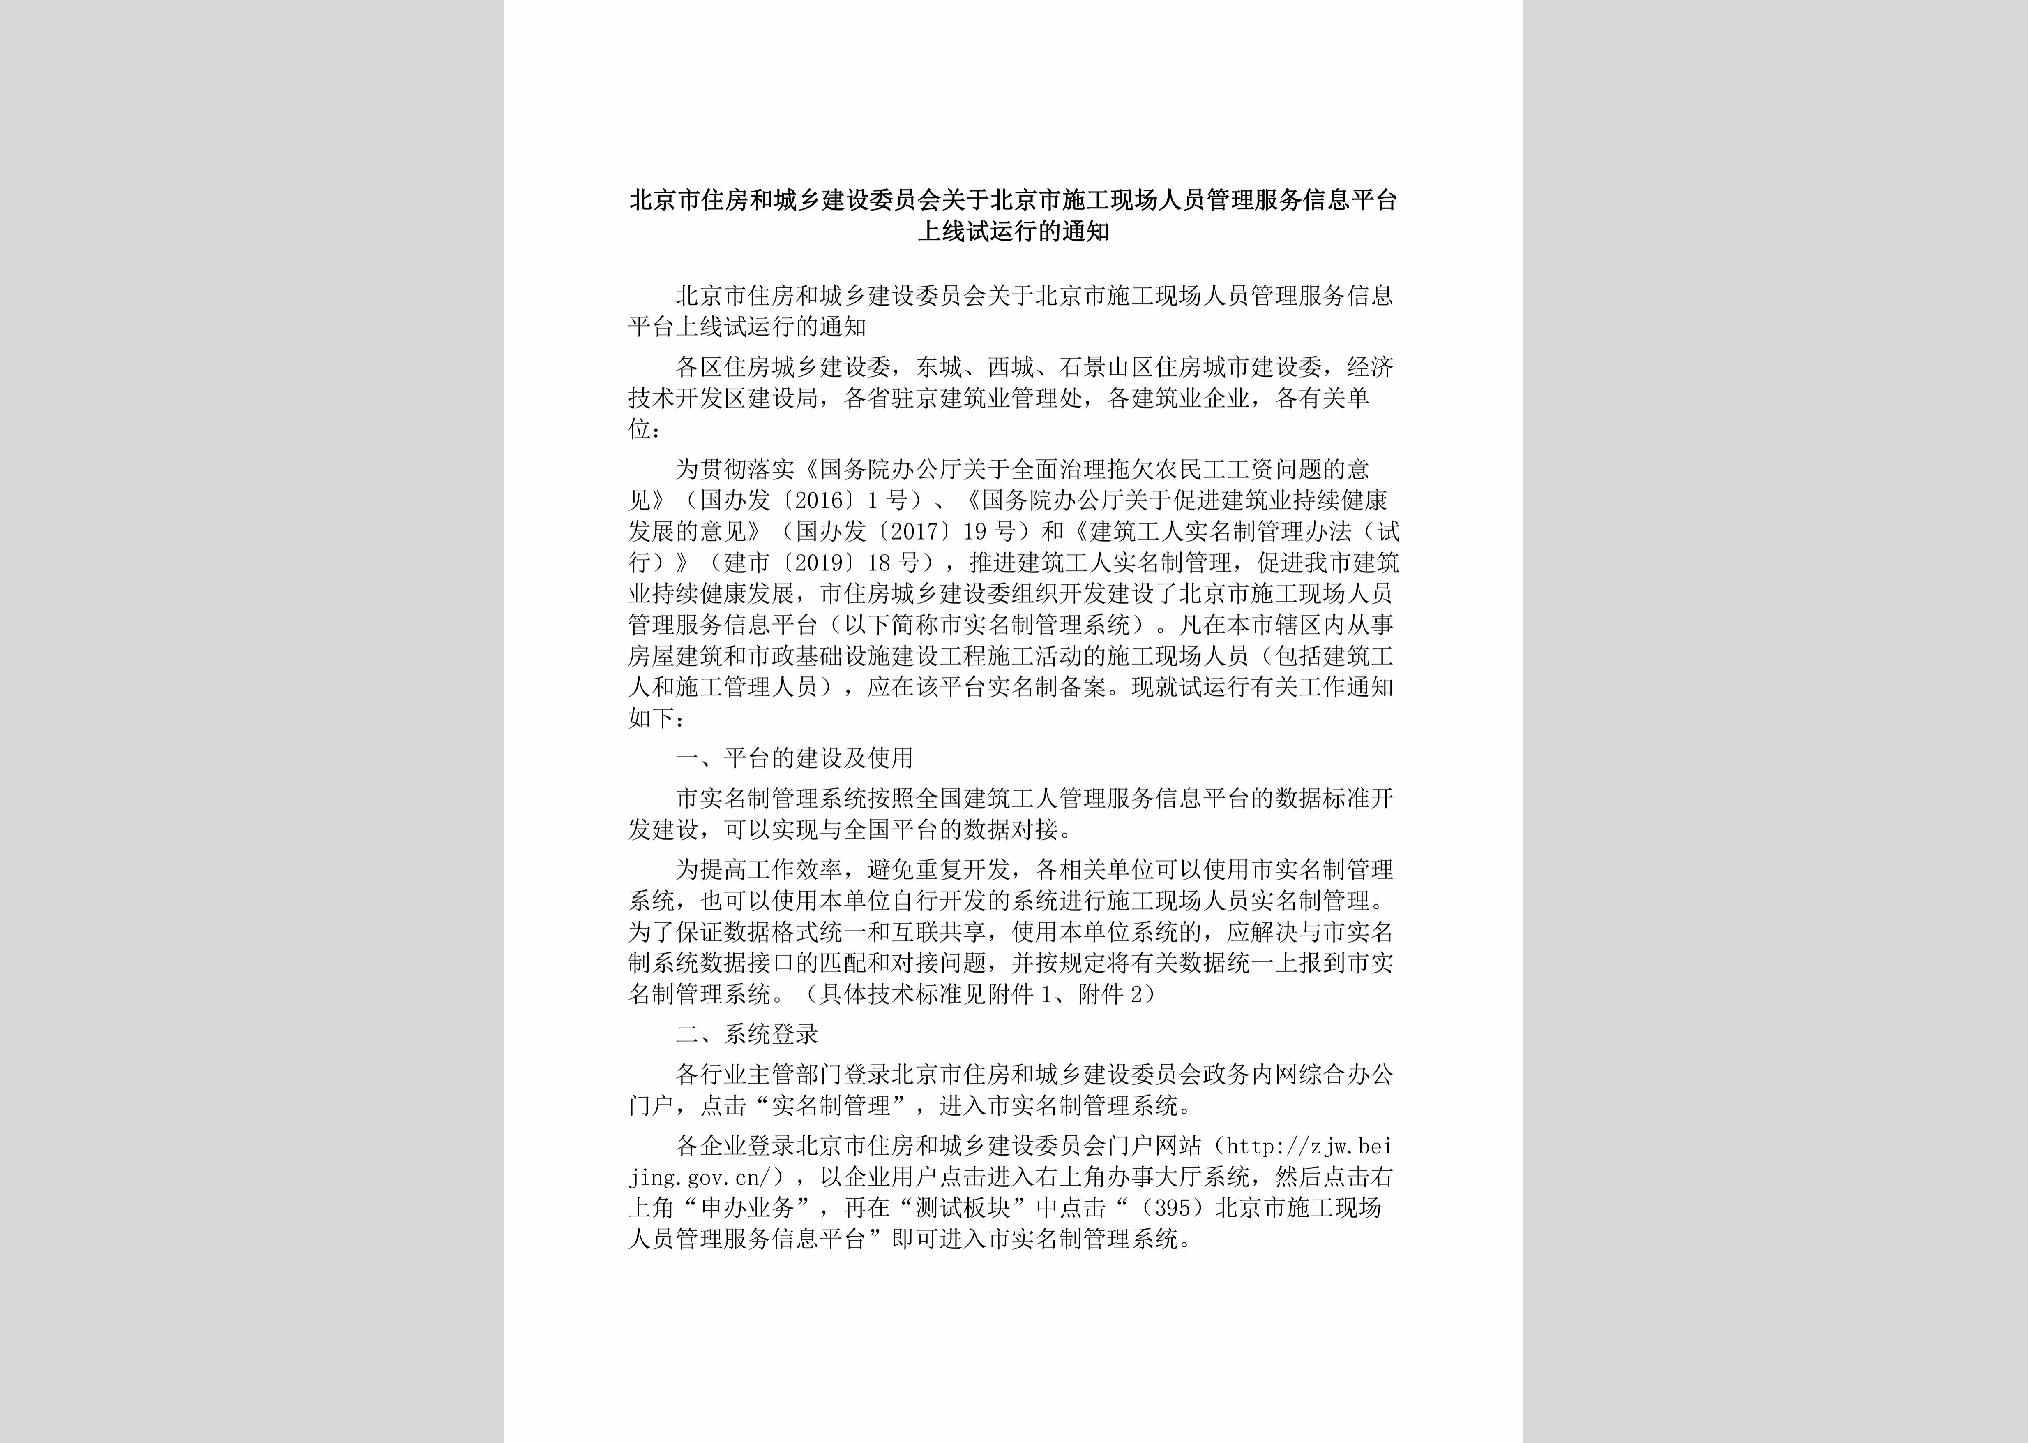 BJ-SGXCRYGL-2019：北京市住房和城乡建设委员会关于北京市施工现场人员管理服务信息平台上线试运行的通知